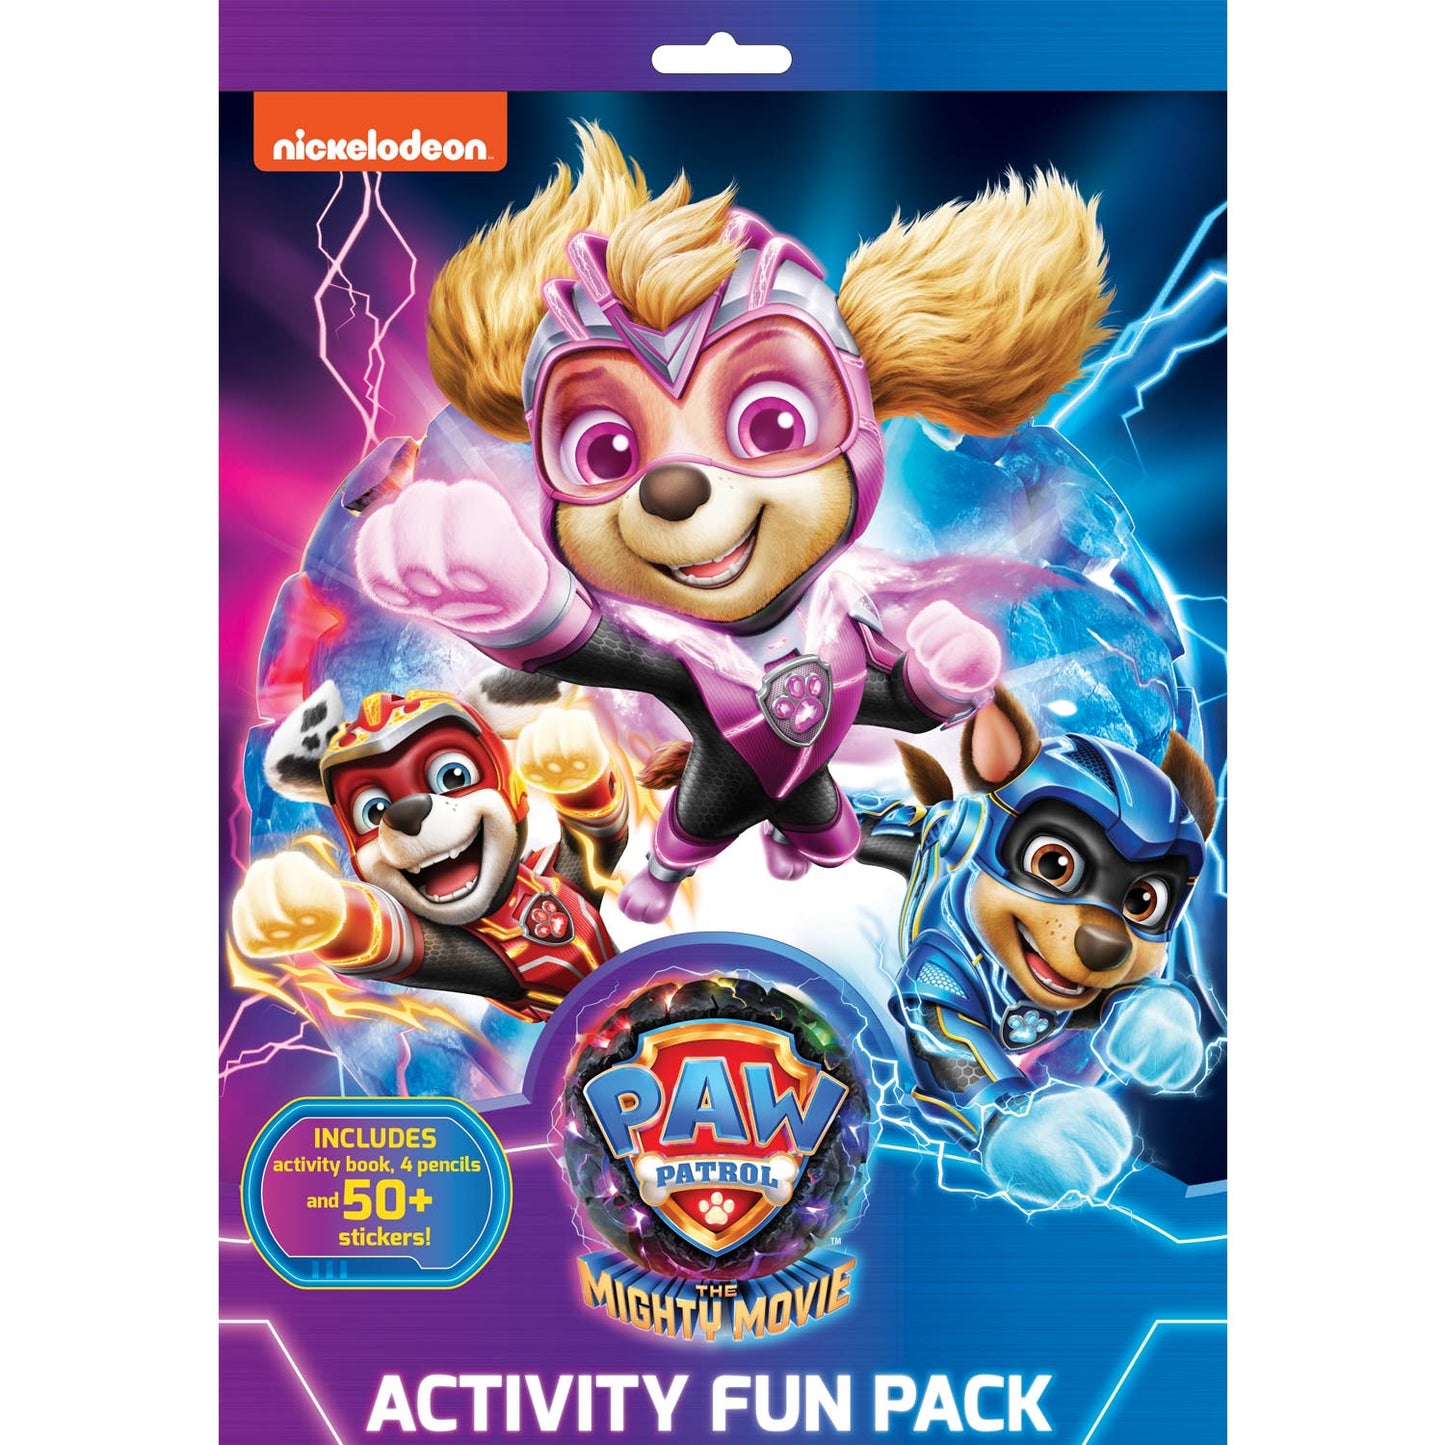 PAW Patrol The Mighty Movie- Activity Fun Pack | Children's books | Activity books | Nickelodeon books | Skye |Movie Storybook